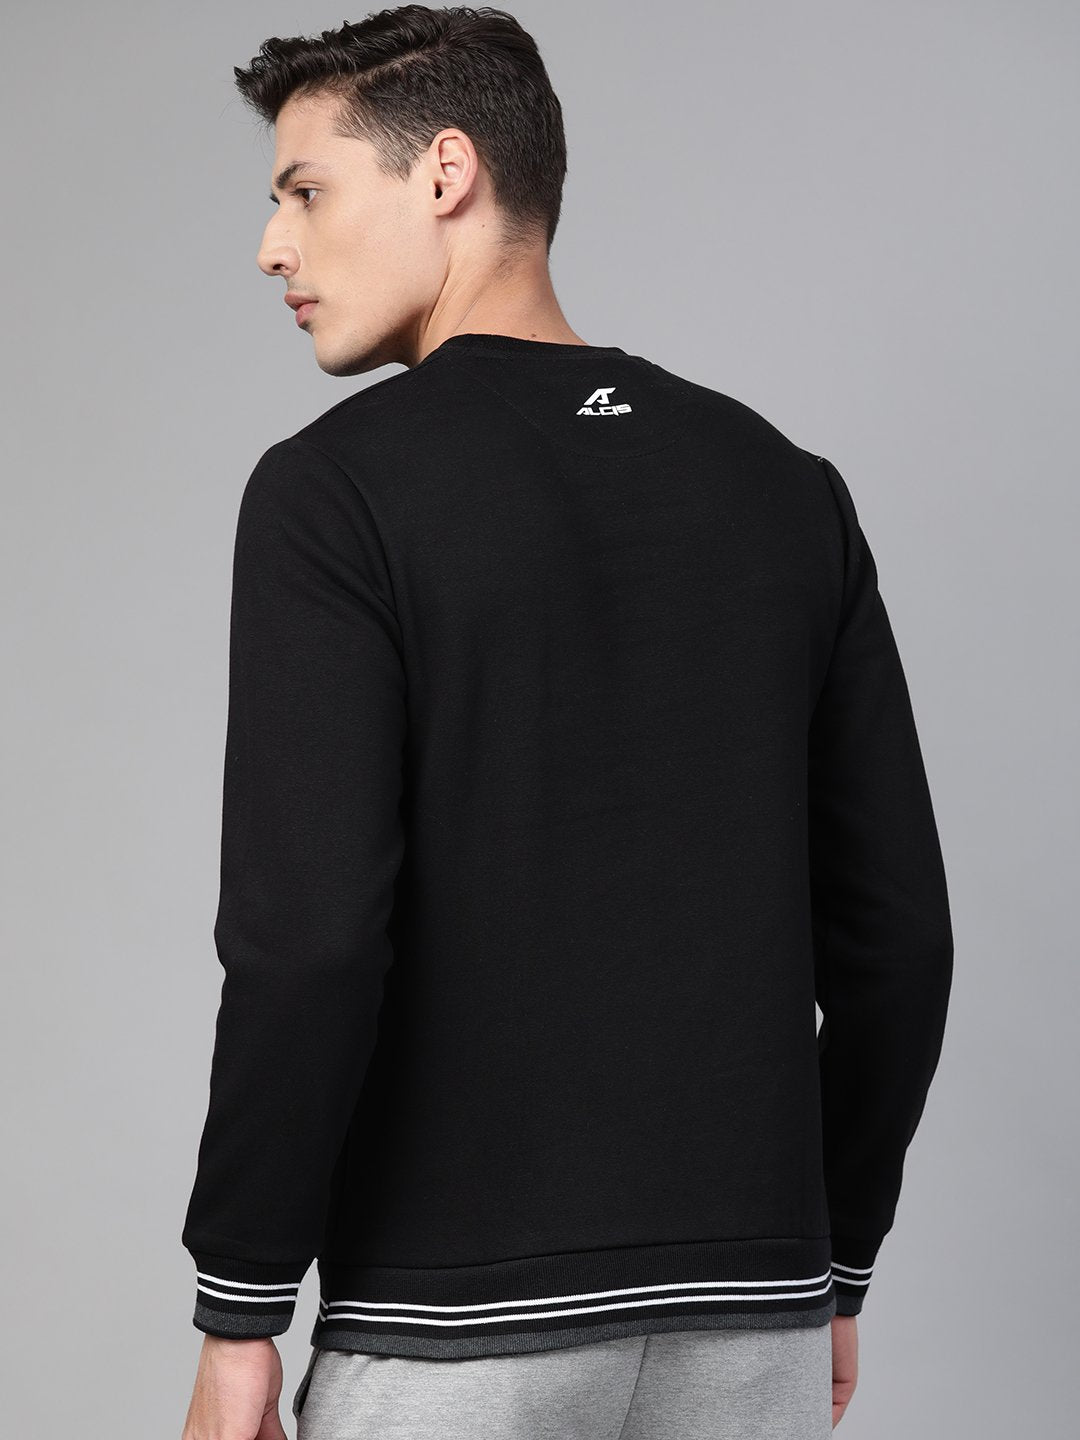 Alcis Men Black  White Printed Detail Sports Sweatshirt